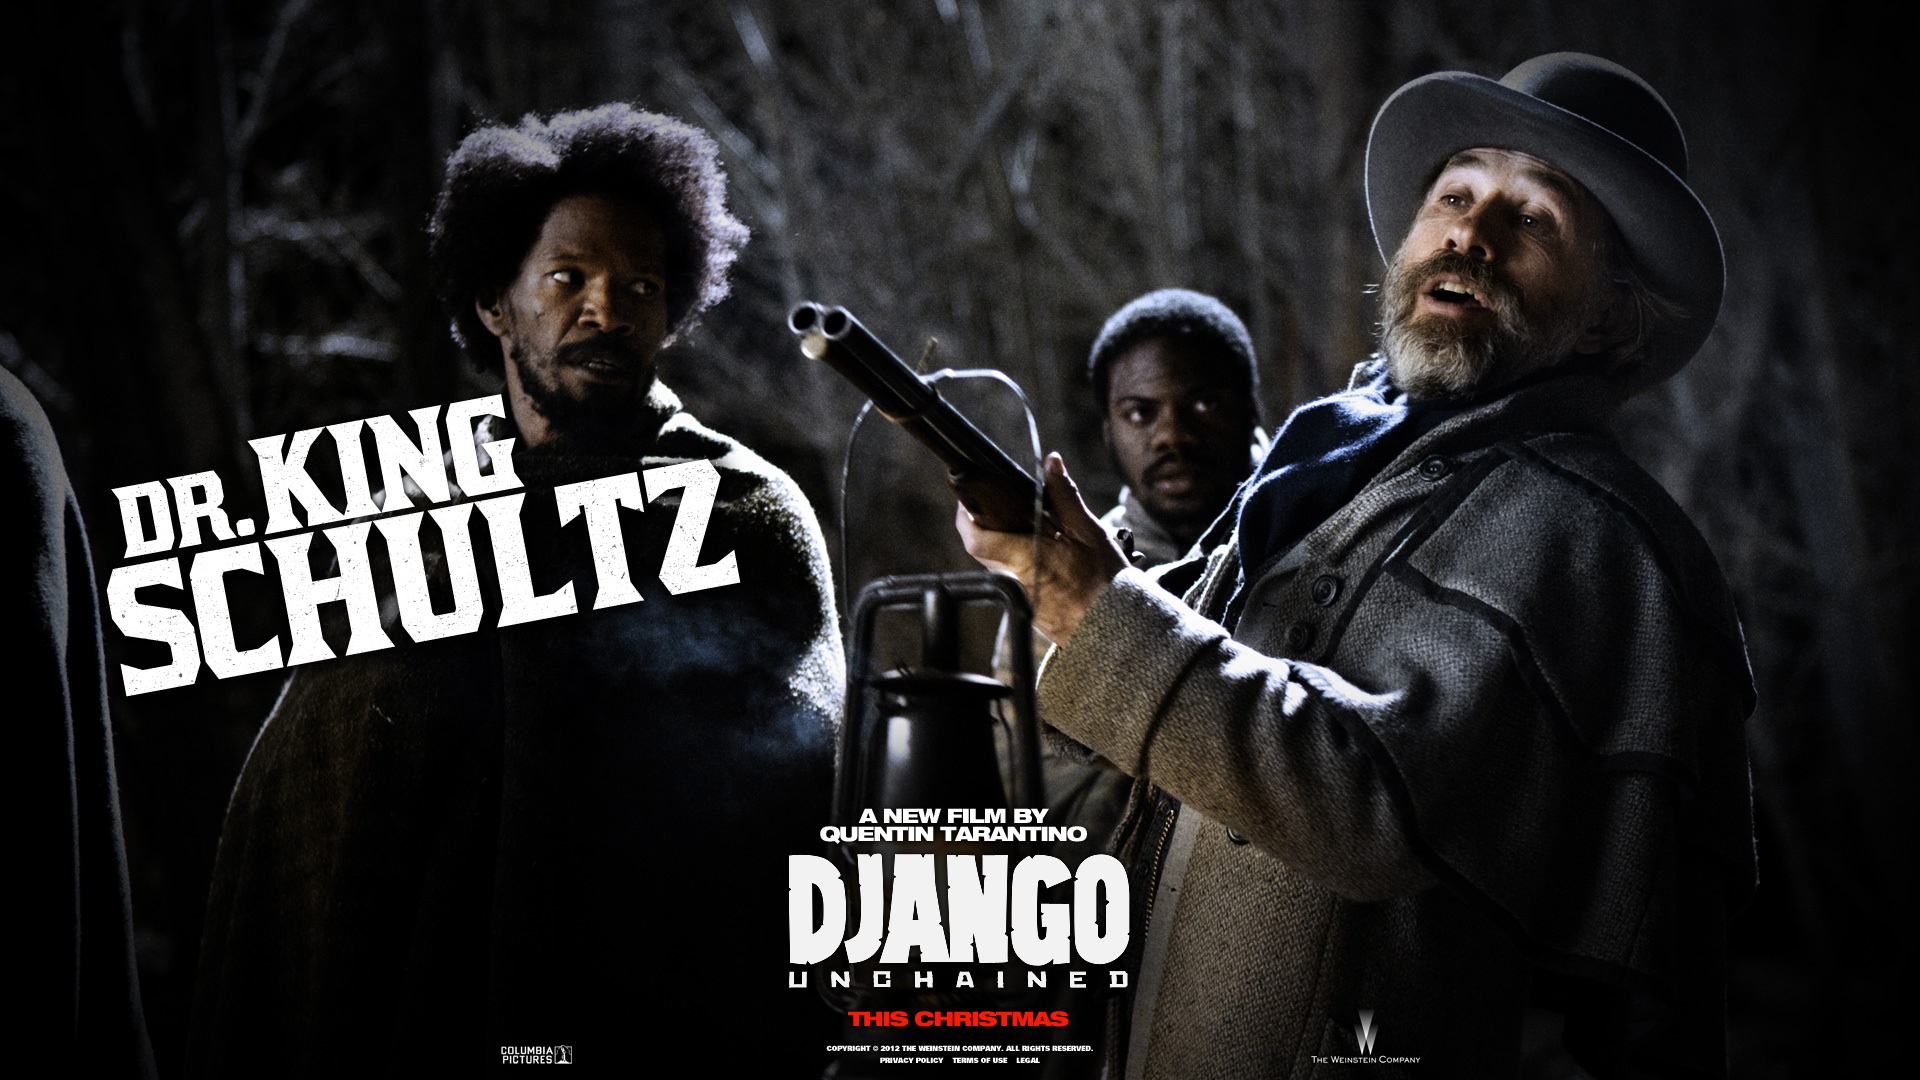 Future Shop is releasing a Django Unchained Exclusive Blu-ray Steelbook in April